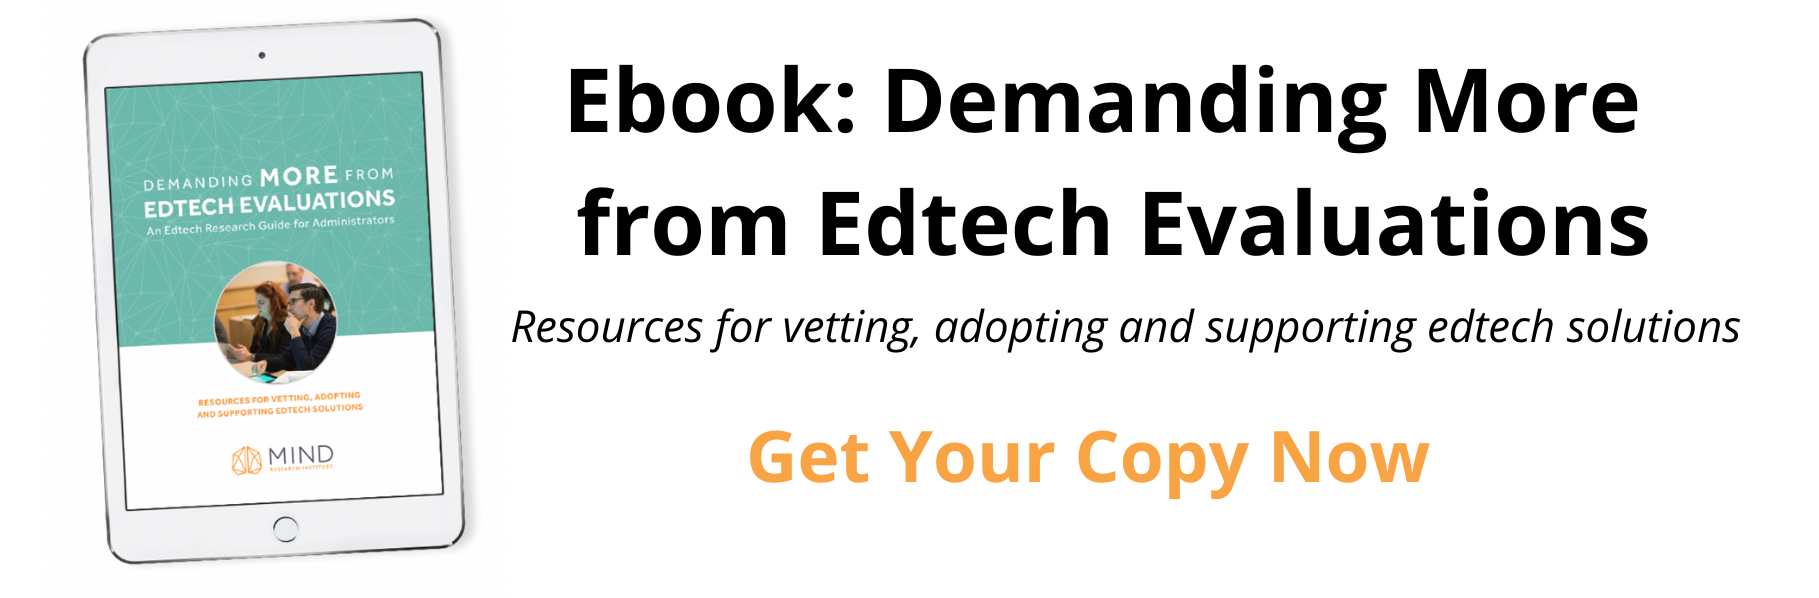 ebook edtech evaluation banner